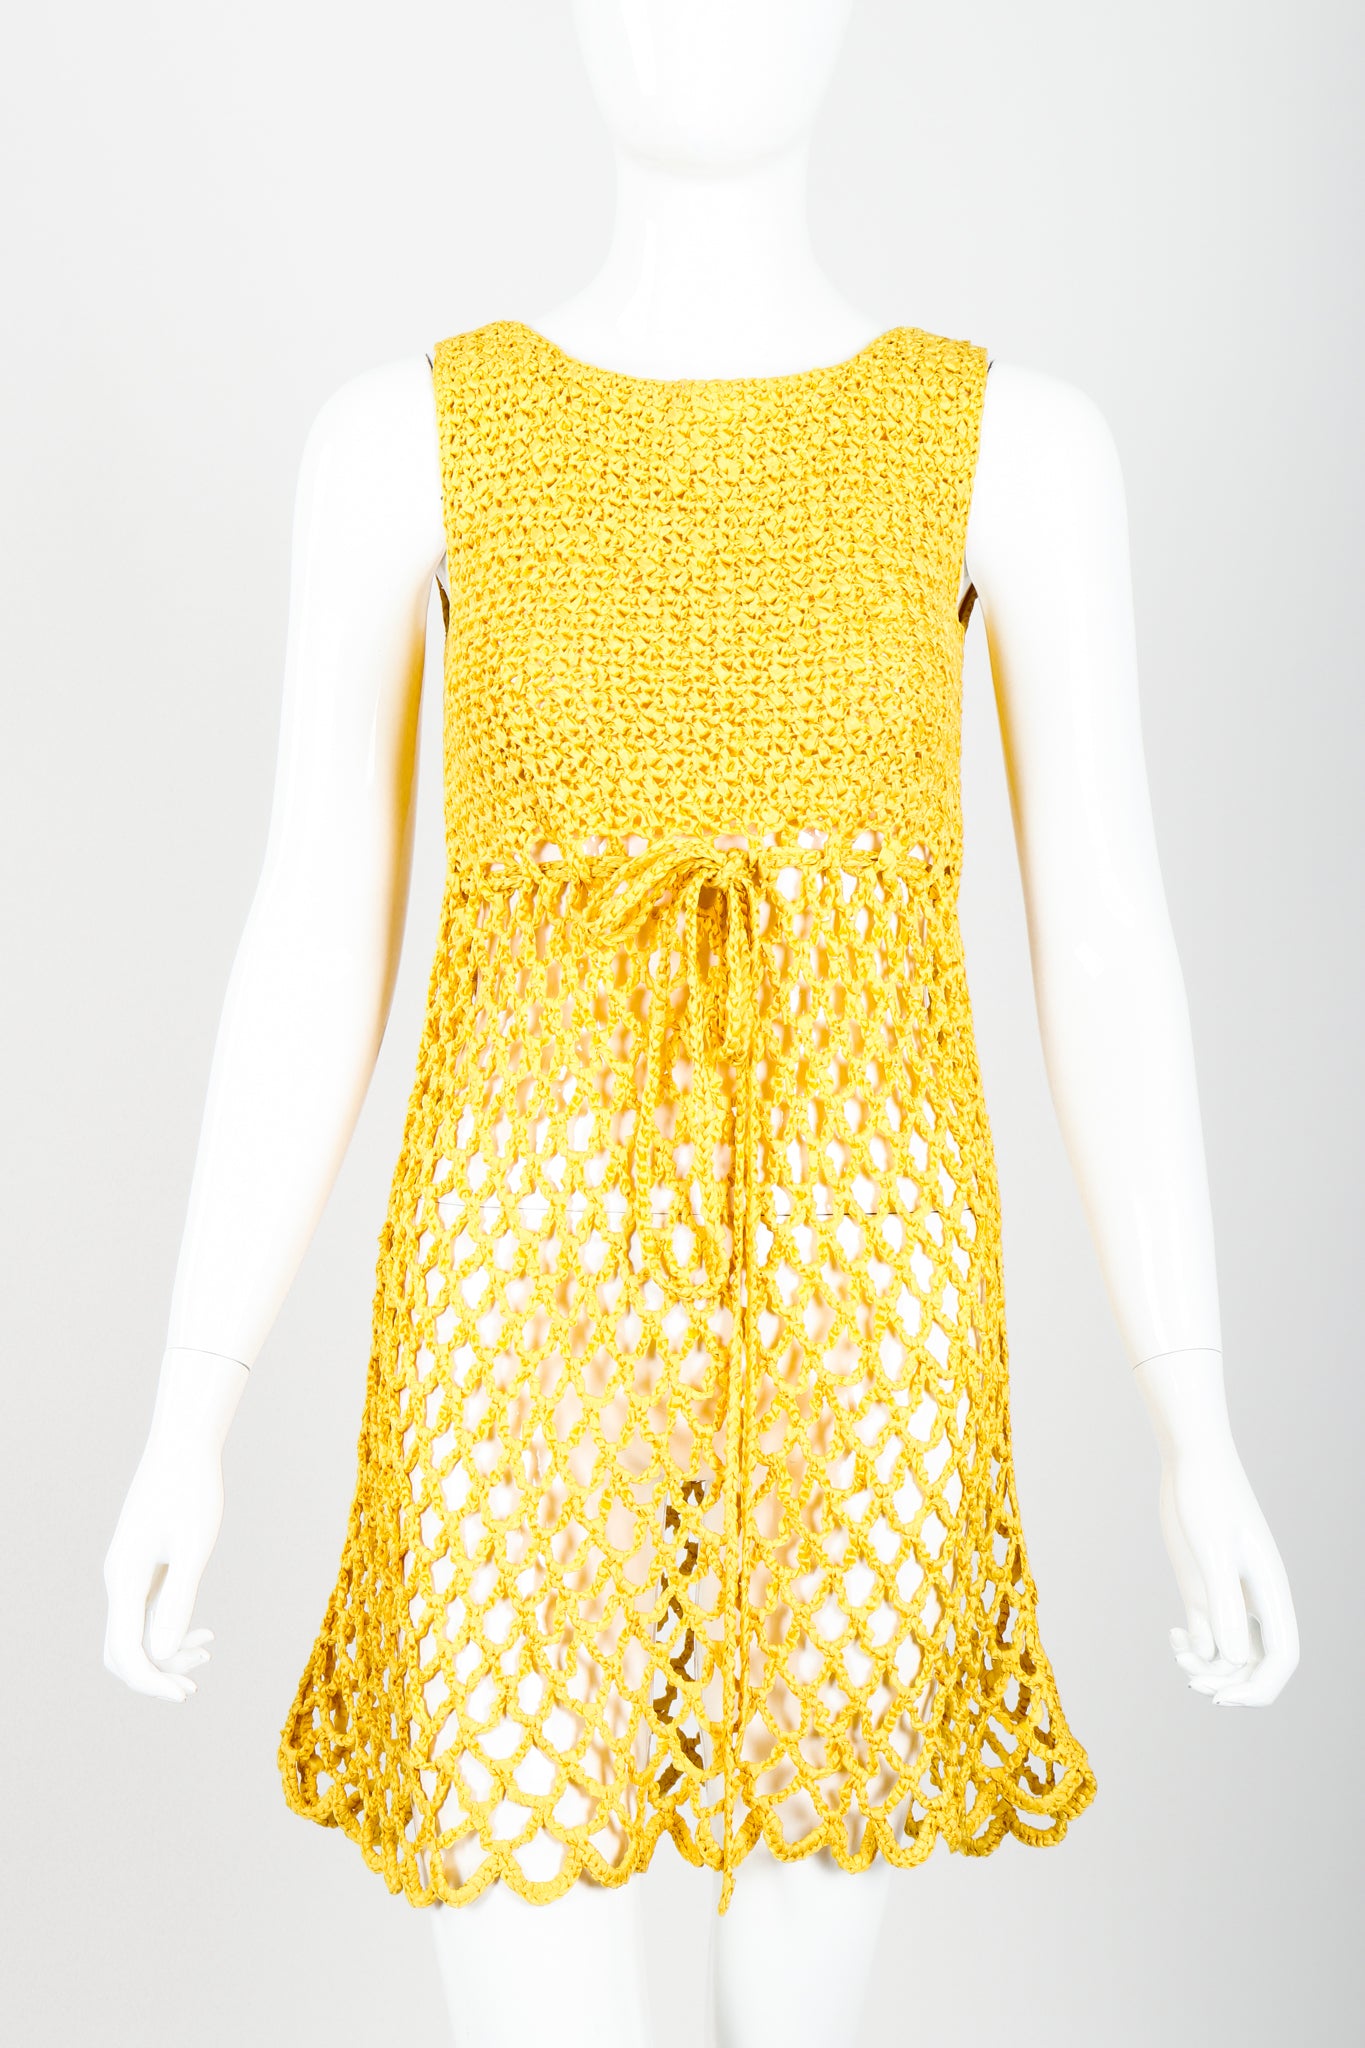 Vintage Crochet Net Dress Swim Coverup on Mannequin front crop at Recess Los Angeles